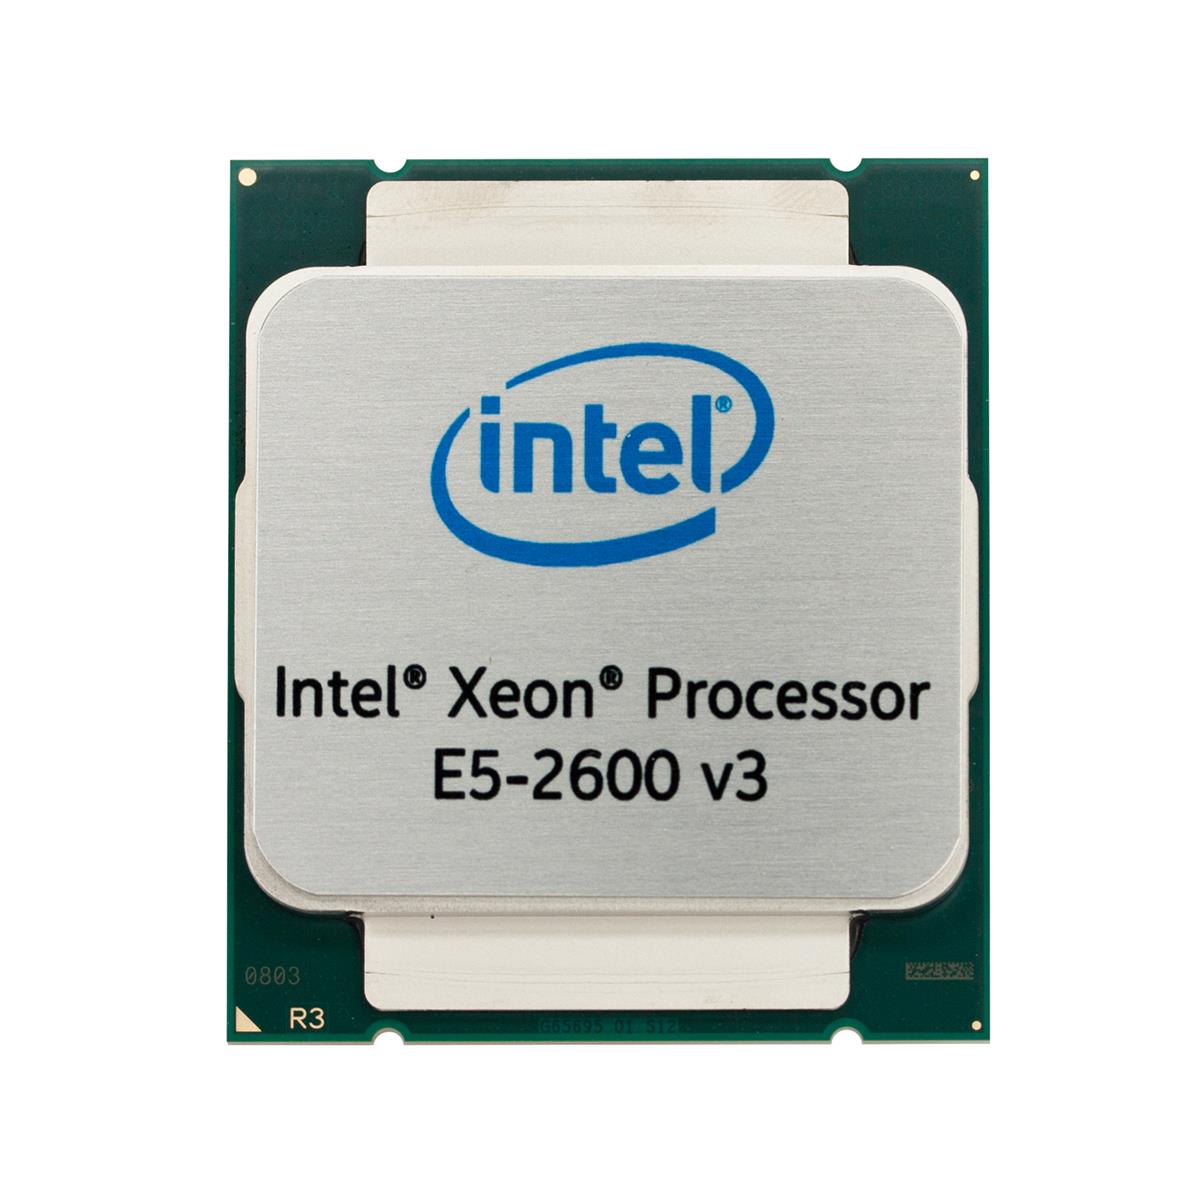 4XG0F28821 Lenovo 1.60GHz 6.40GT/s QPI 15MB L3 Cache Intel Xeon E5-2603 v3 6 Core Processor Upgrade